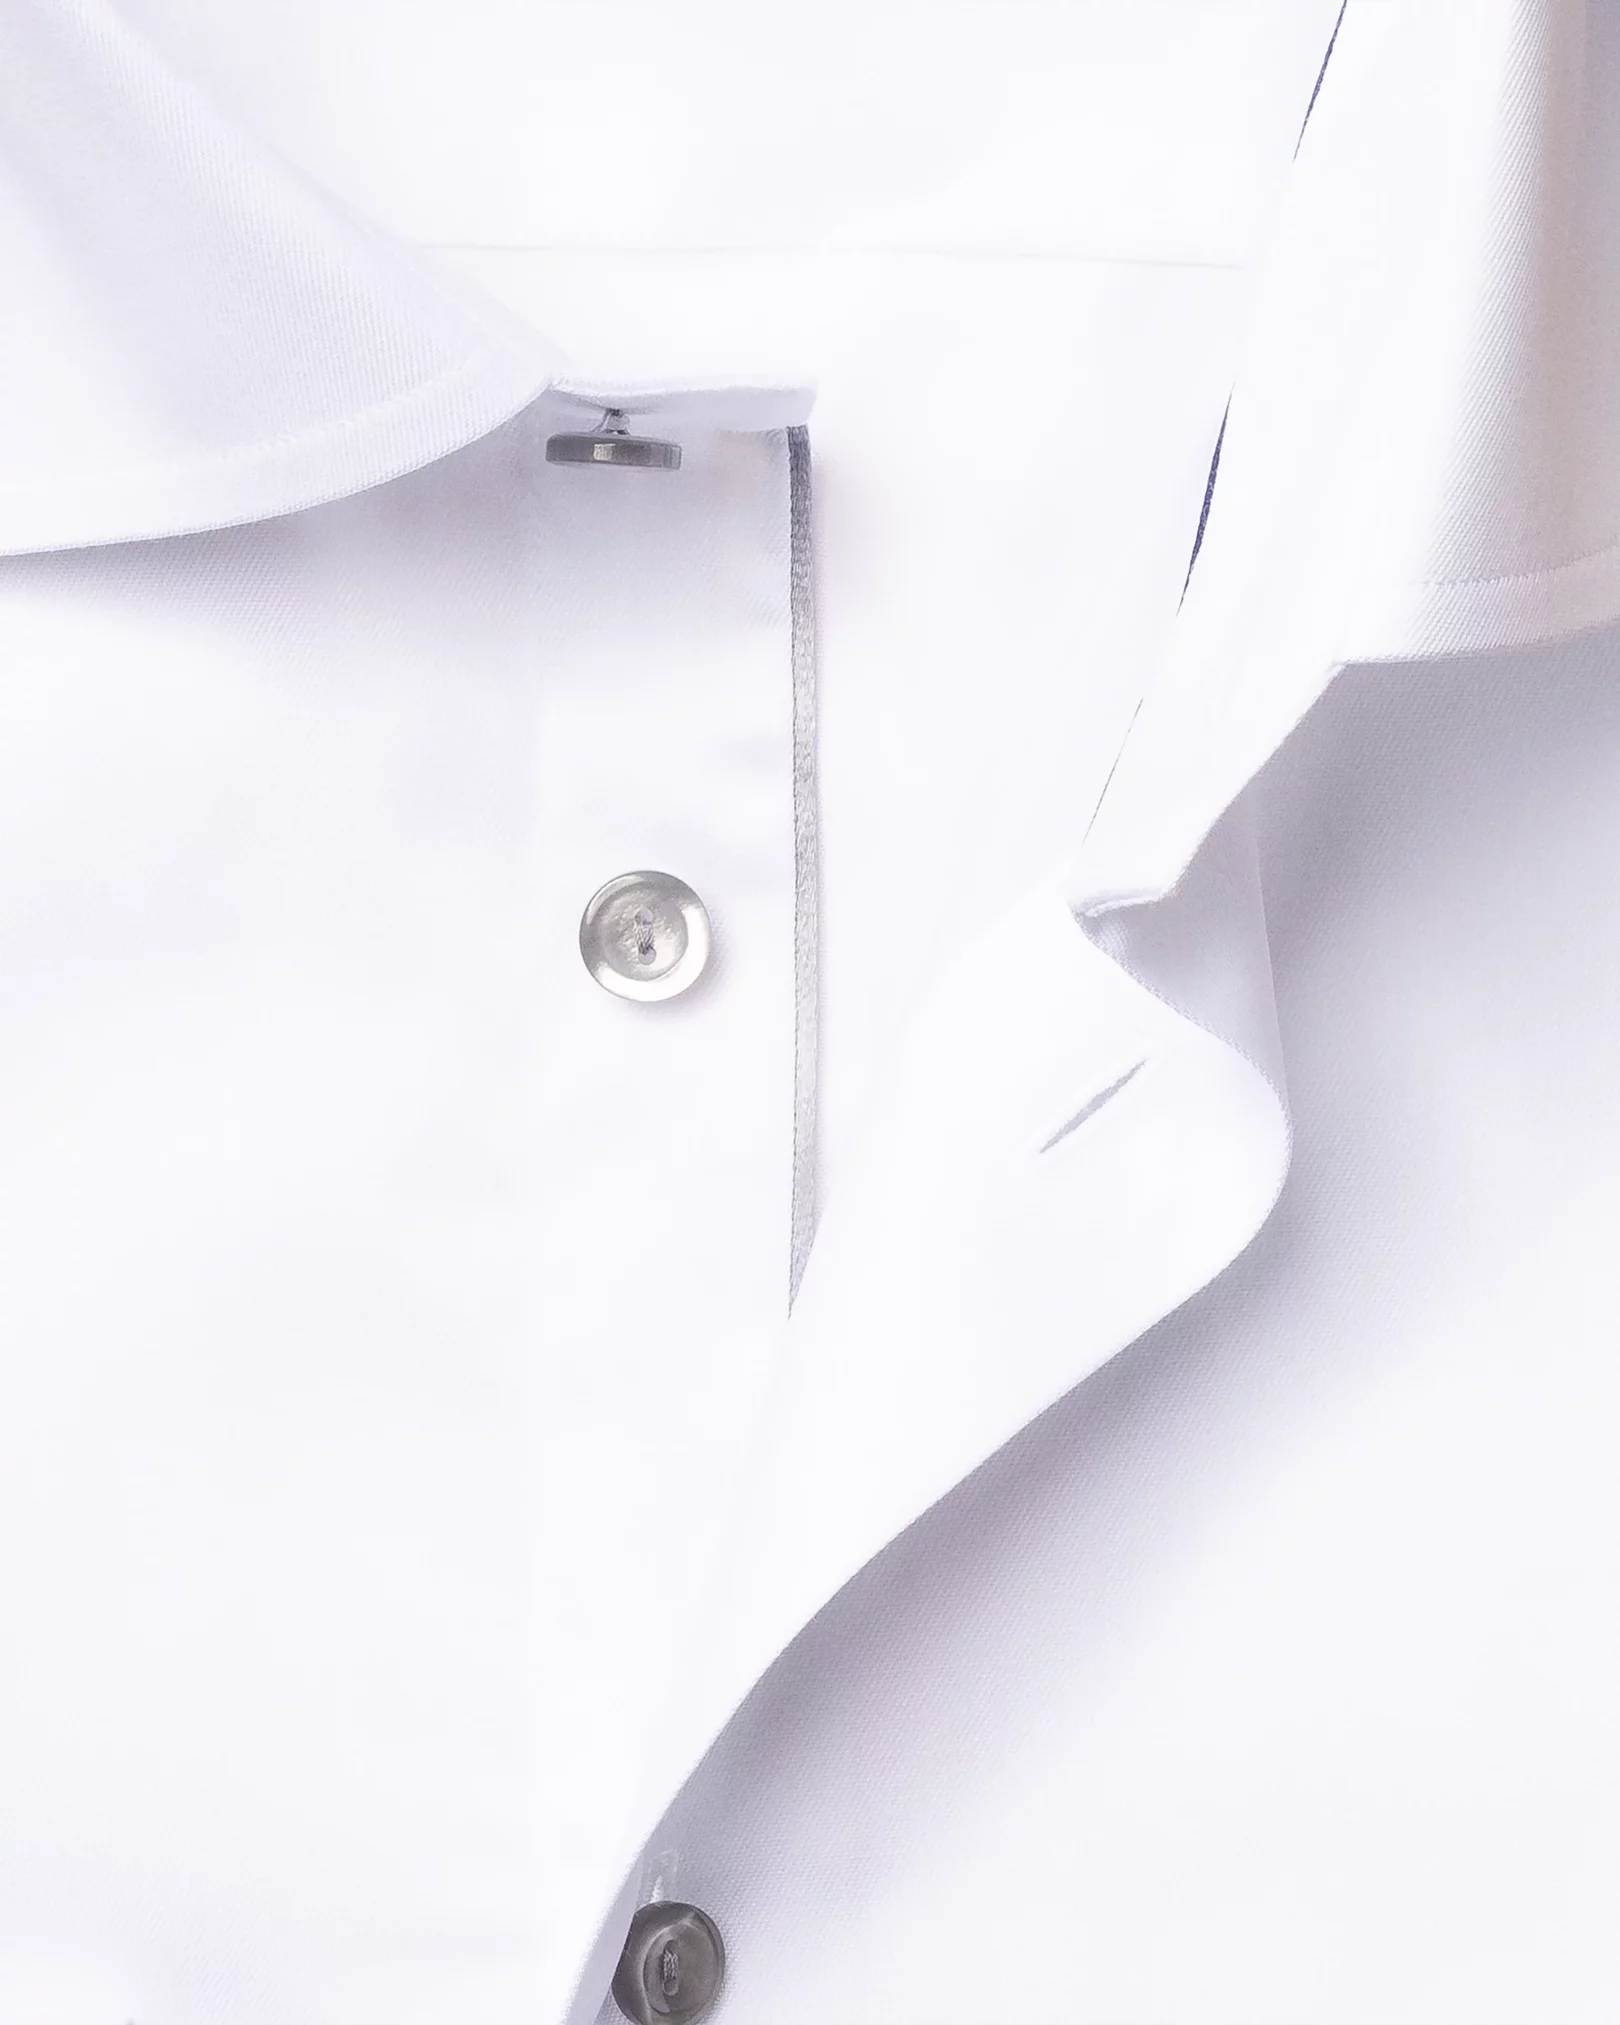 Eton - white twill shirt with grey details